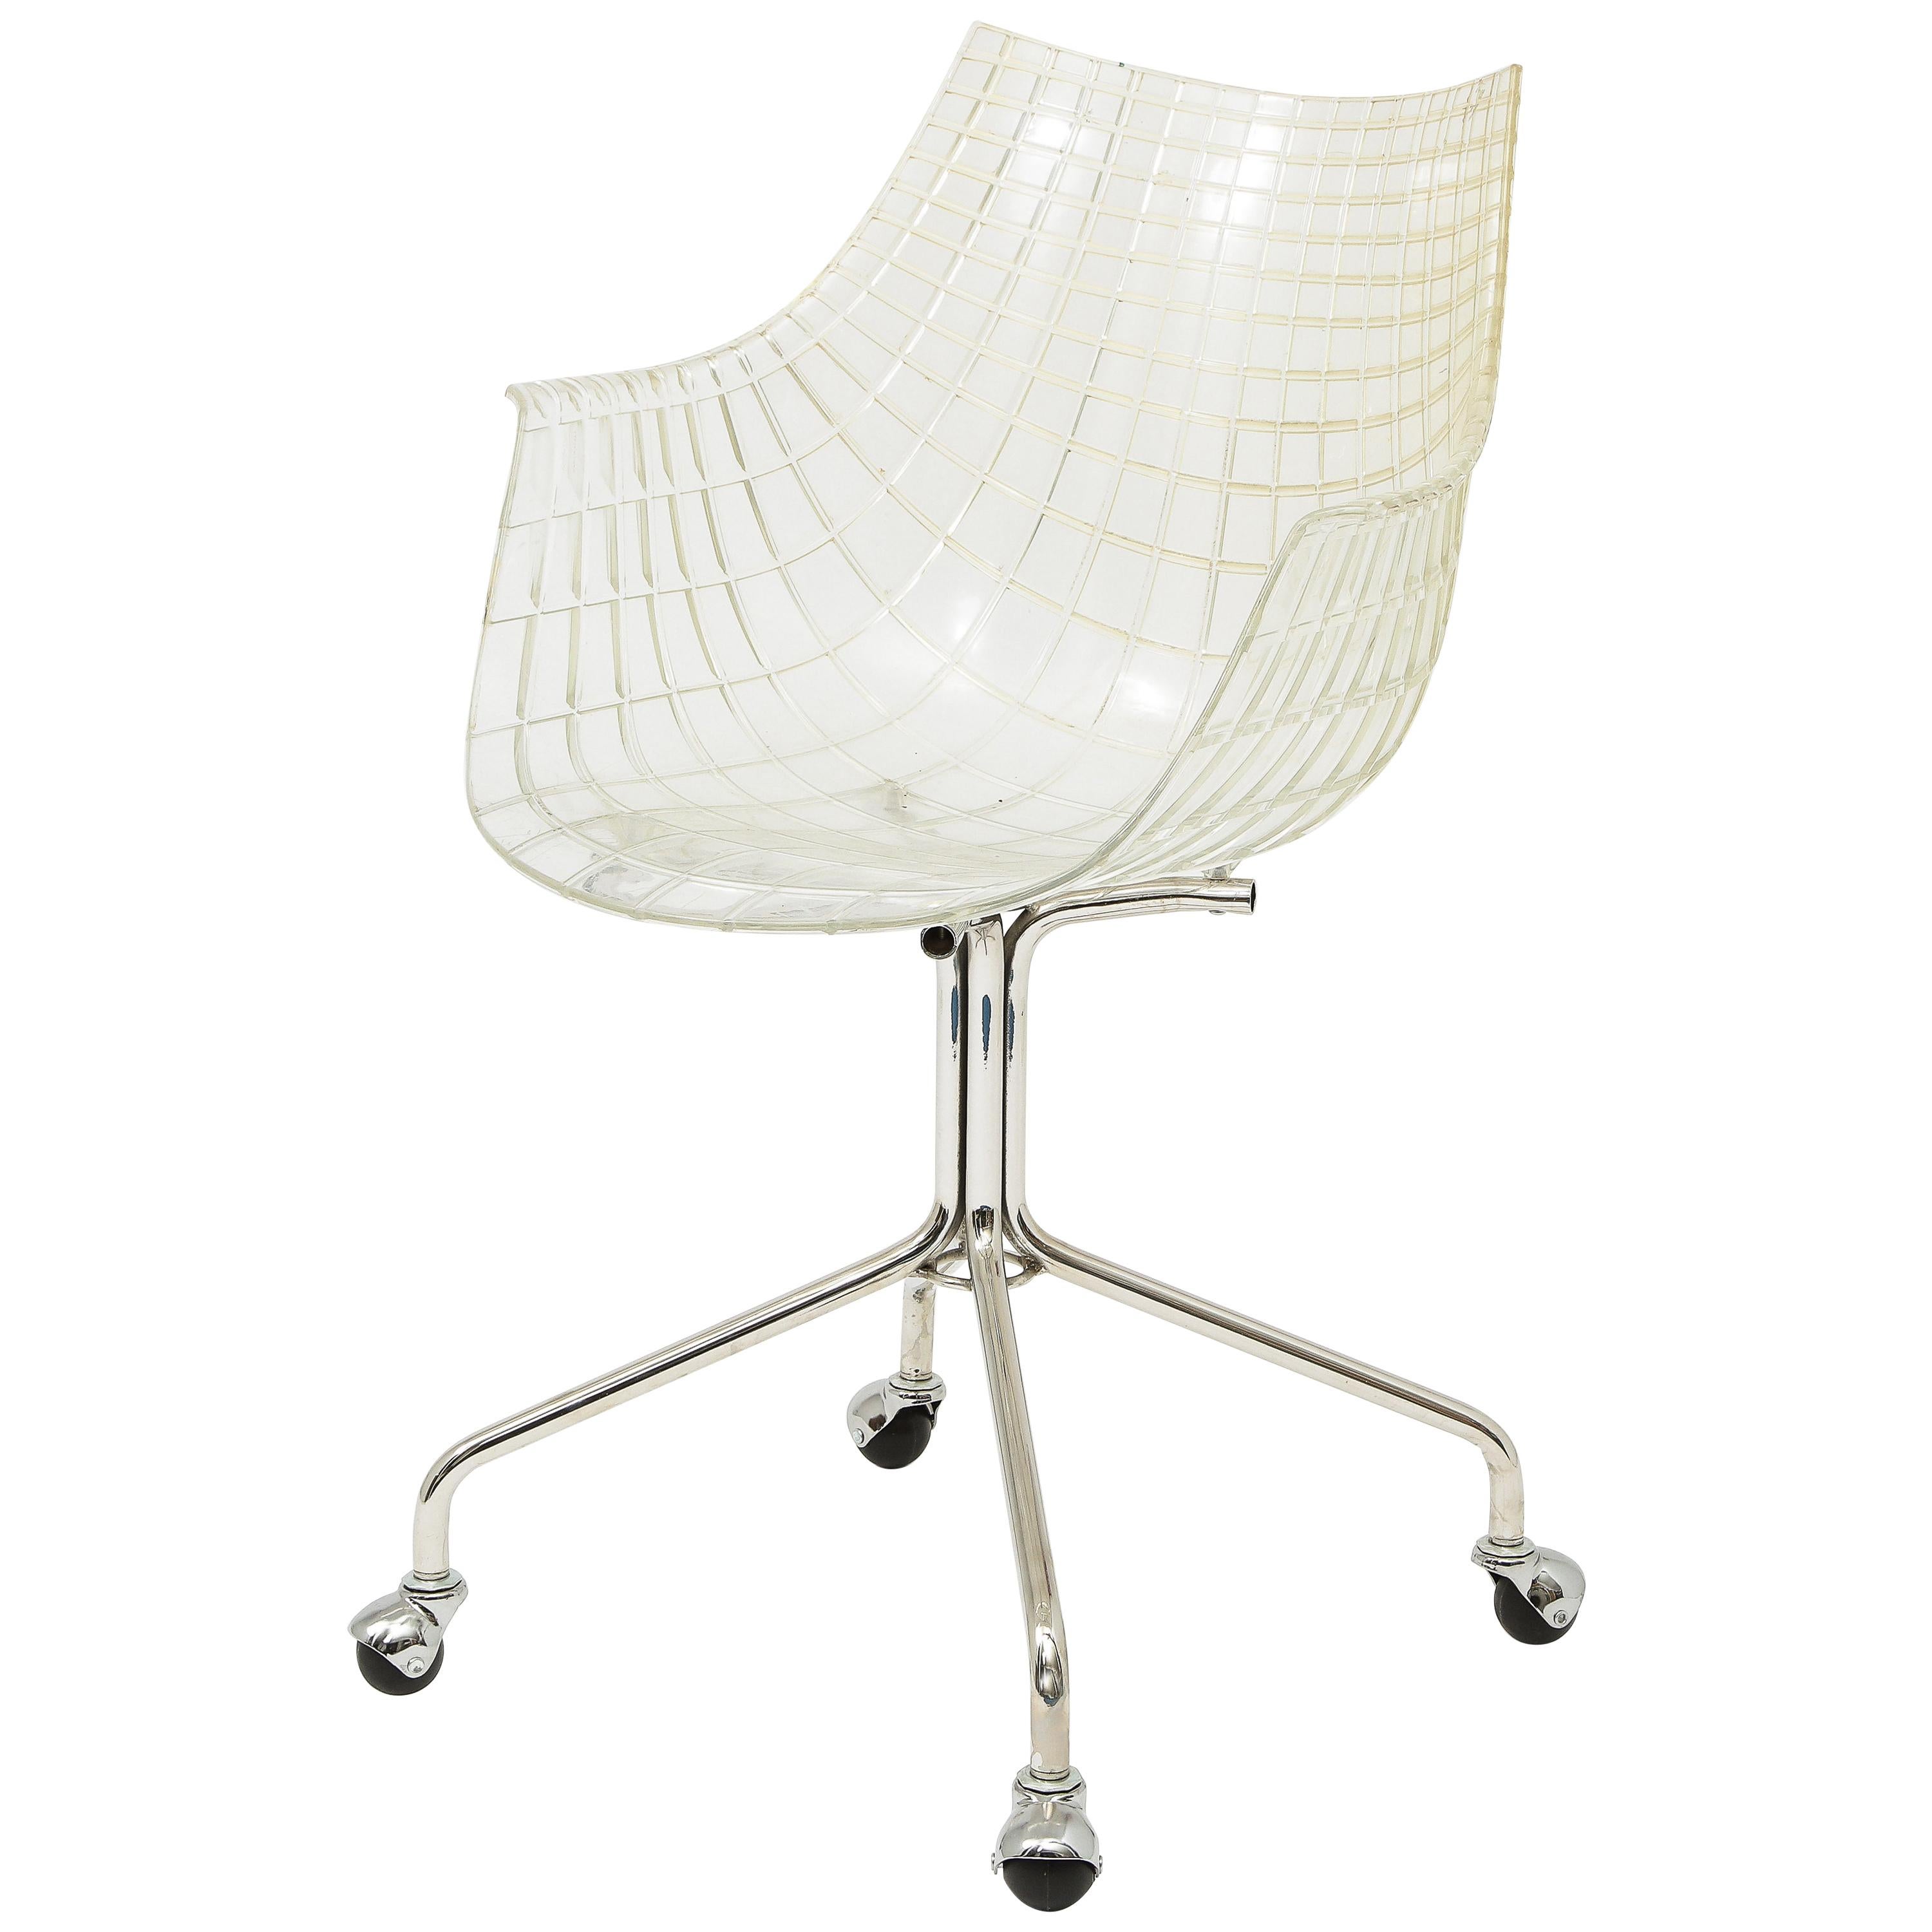 Contemporary Chrome and Acrylic Italian Driade Desk Chairs